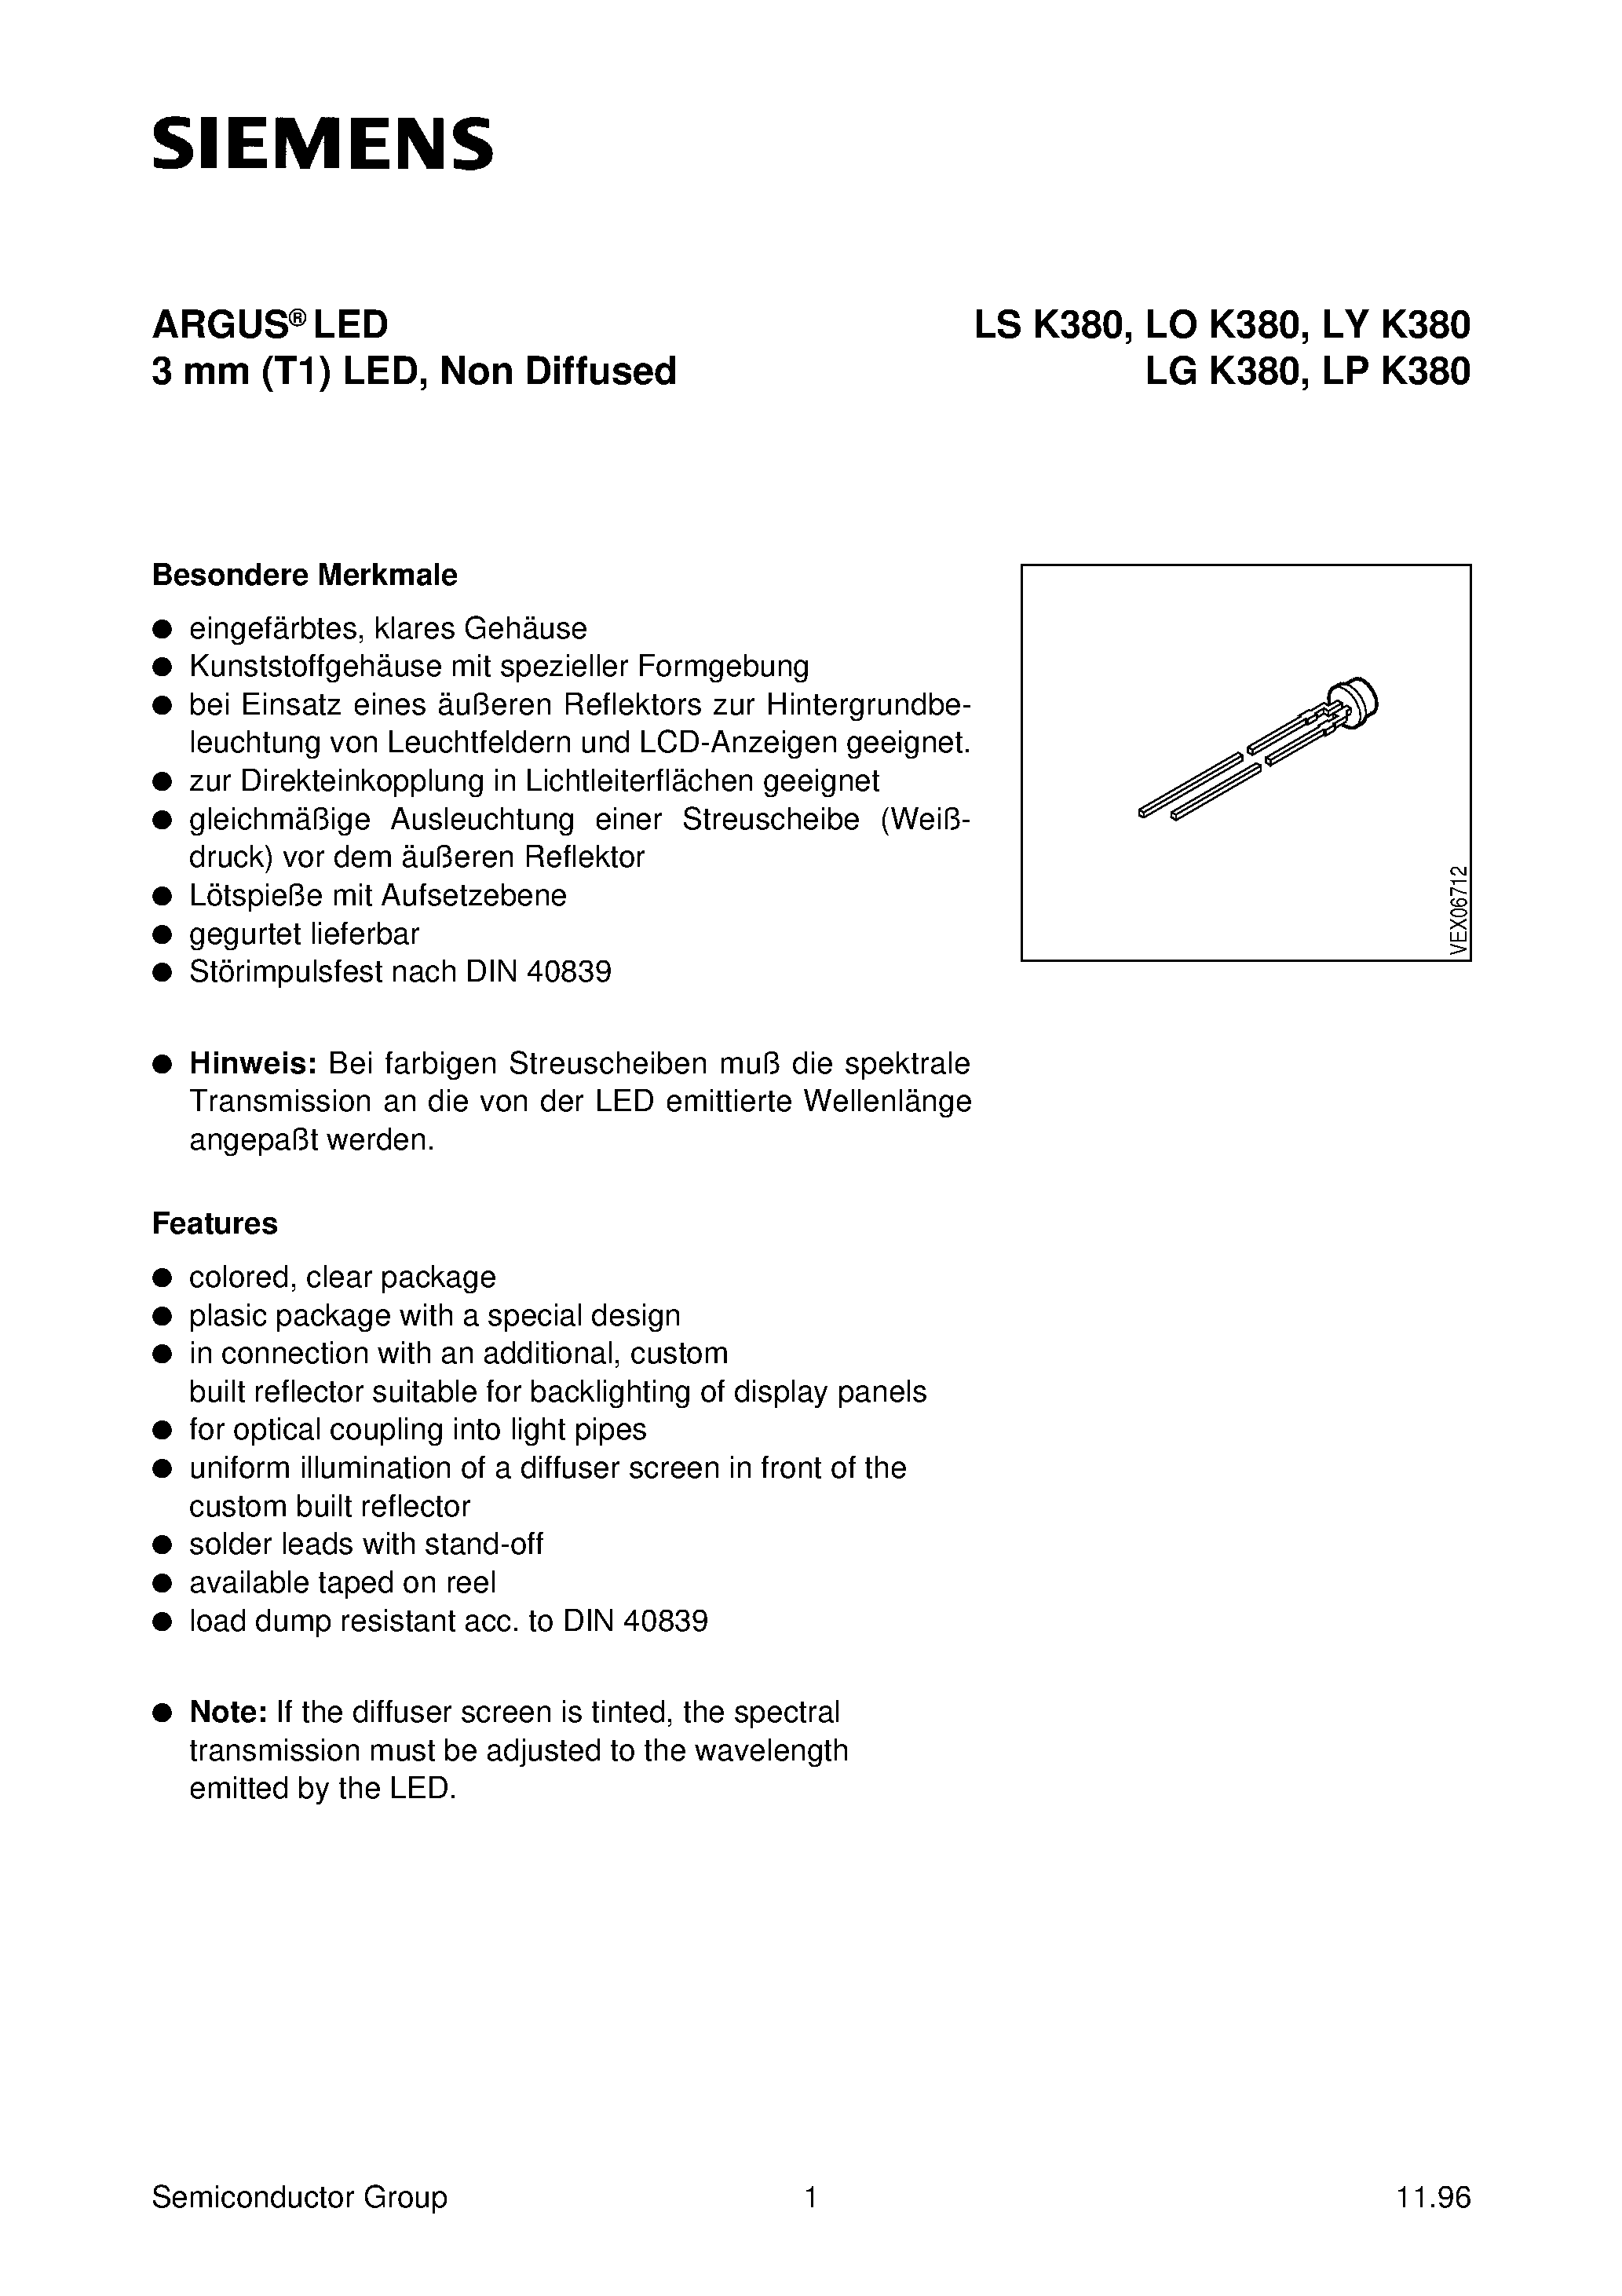 Даташит LSK380-N - ARGUS LED 3 mm T1 LED / Non Diffused страница 1